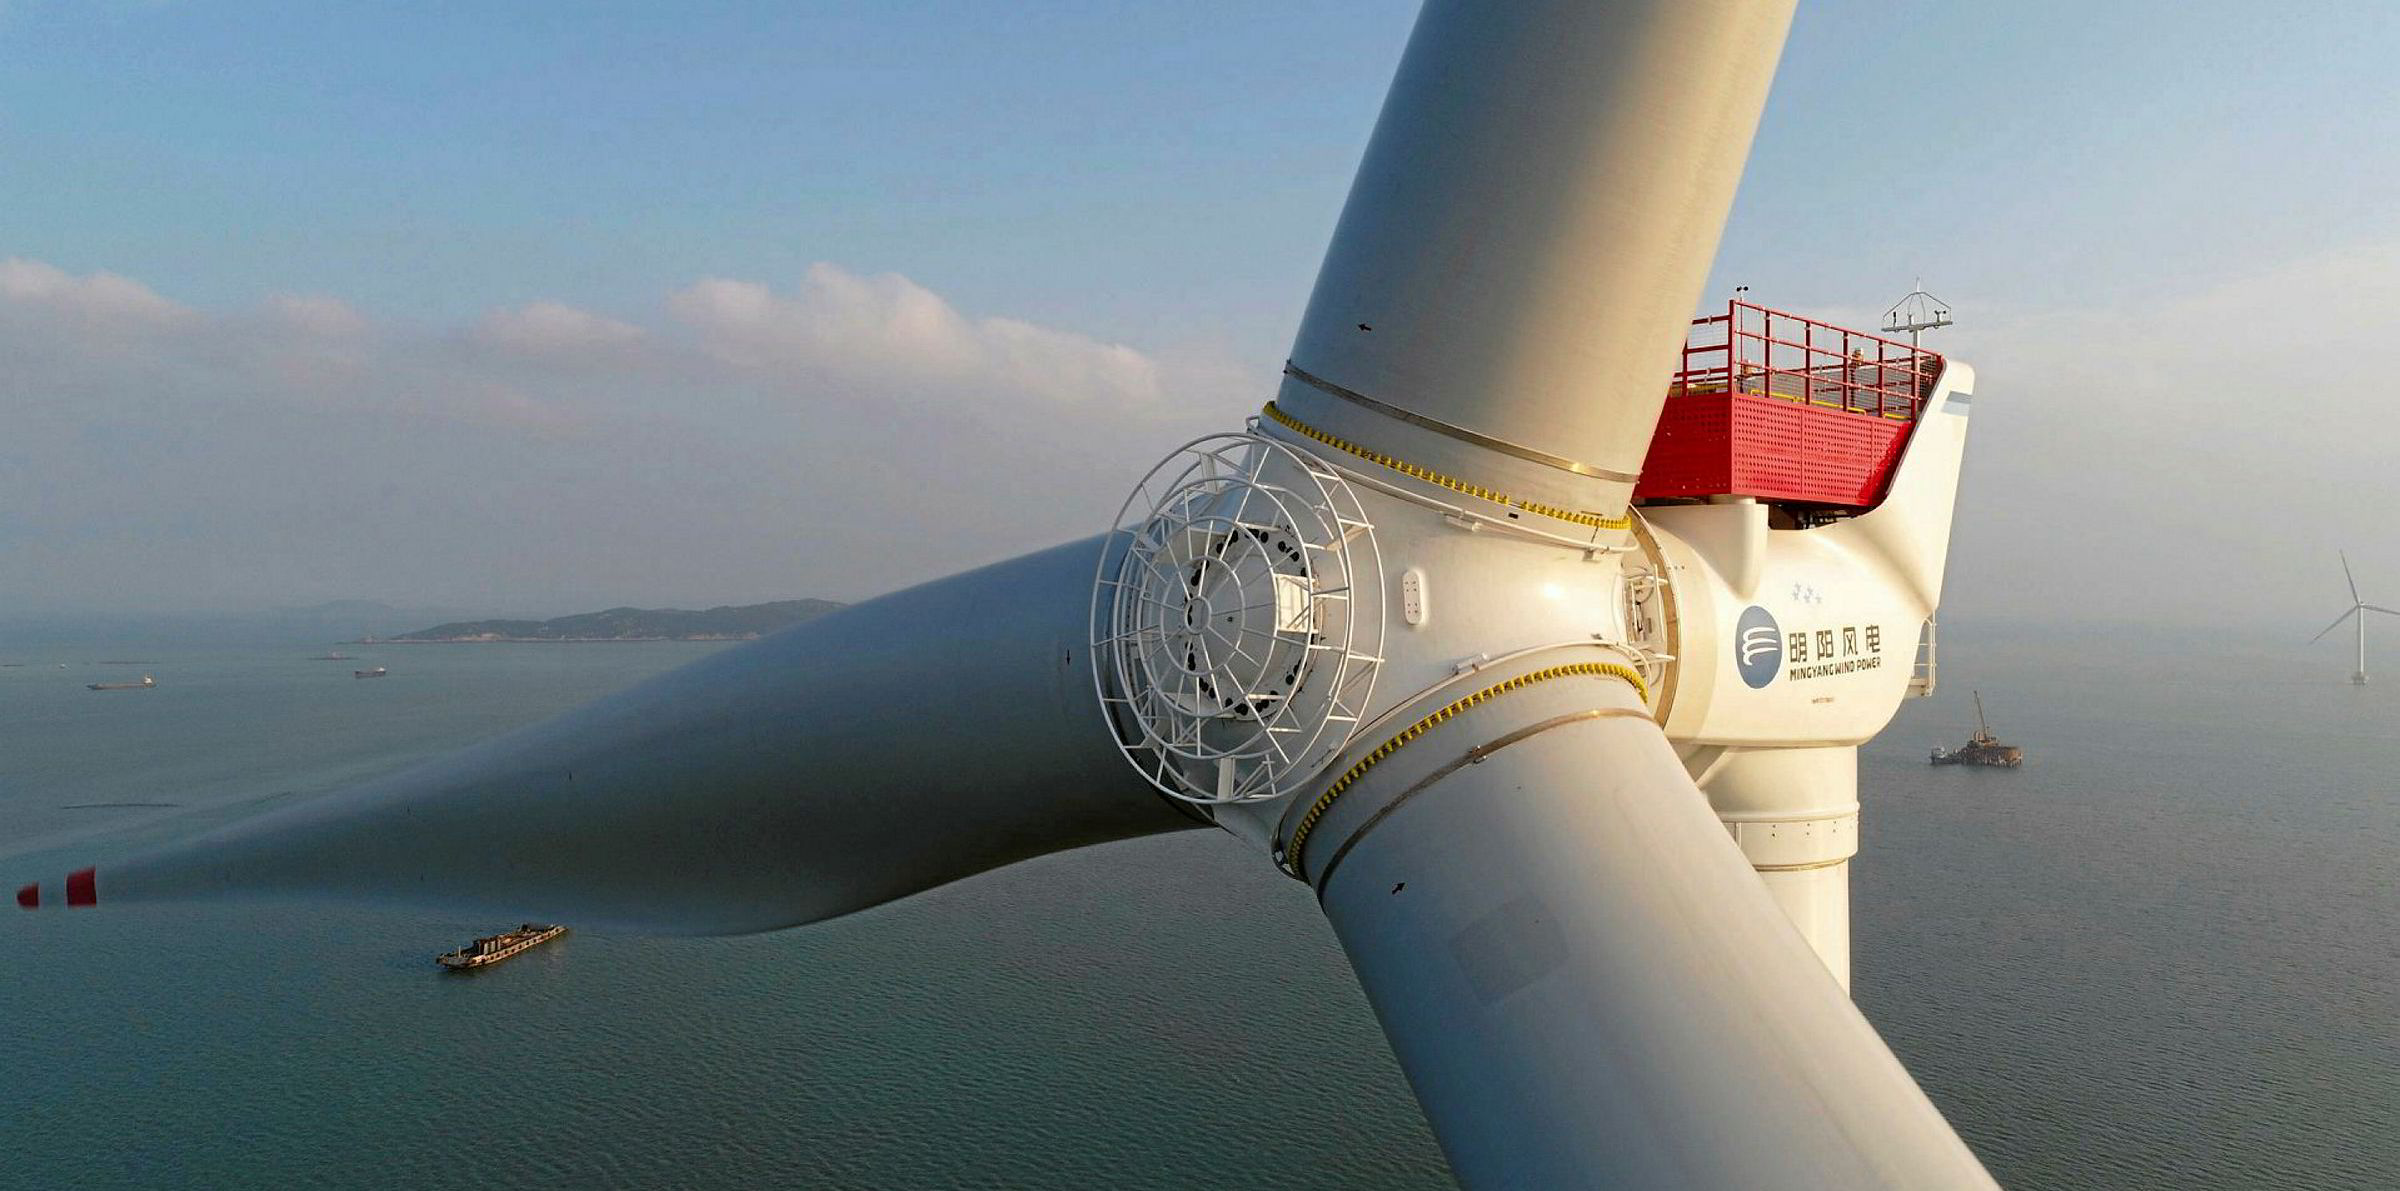 Ming Yang targets Europe as 11MW wind turbine raises bar for China